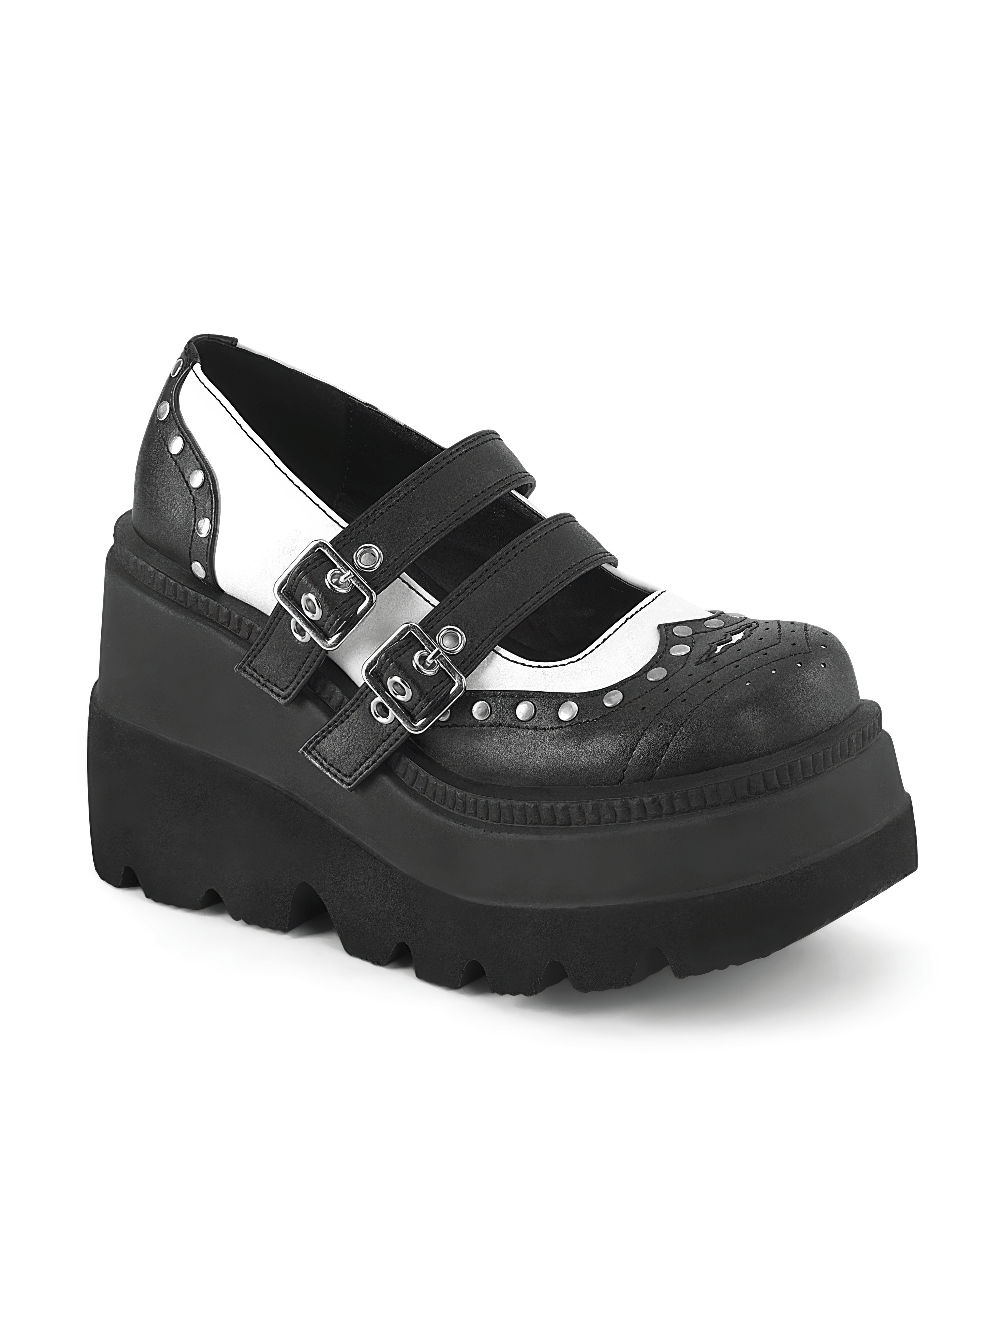 DEMONIA Women's Black and White Lolita Platform Shoes